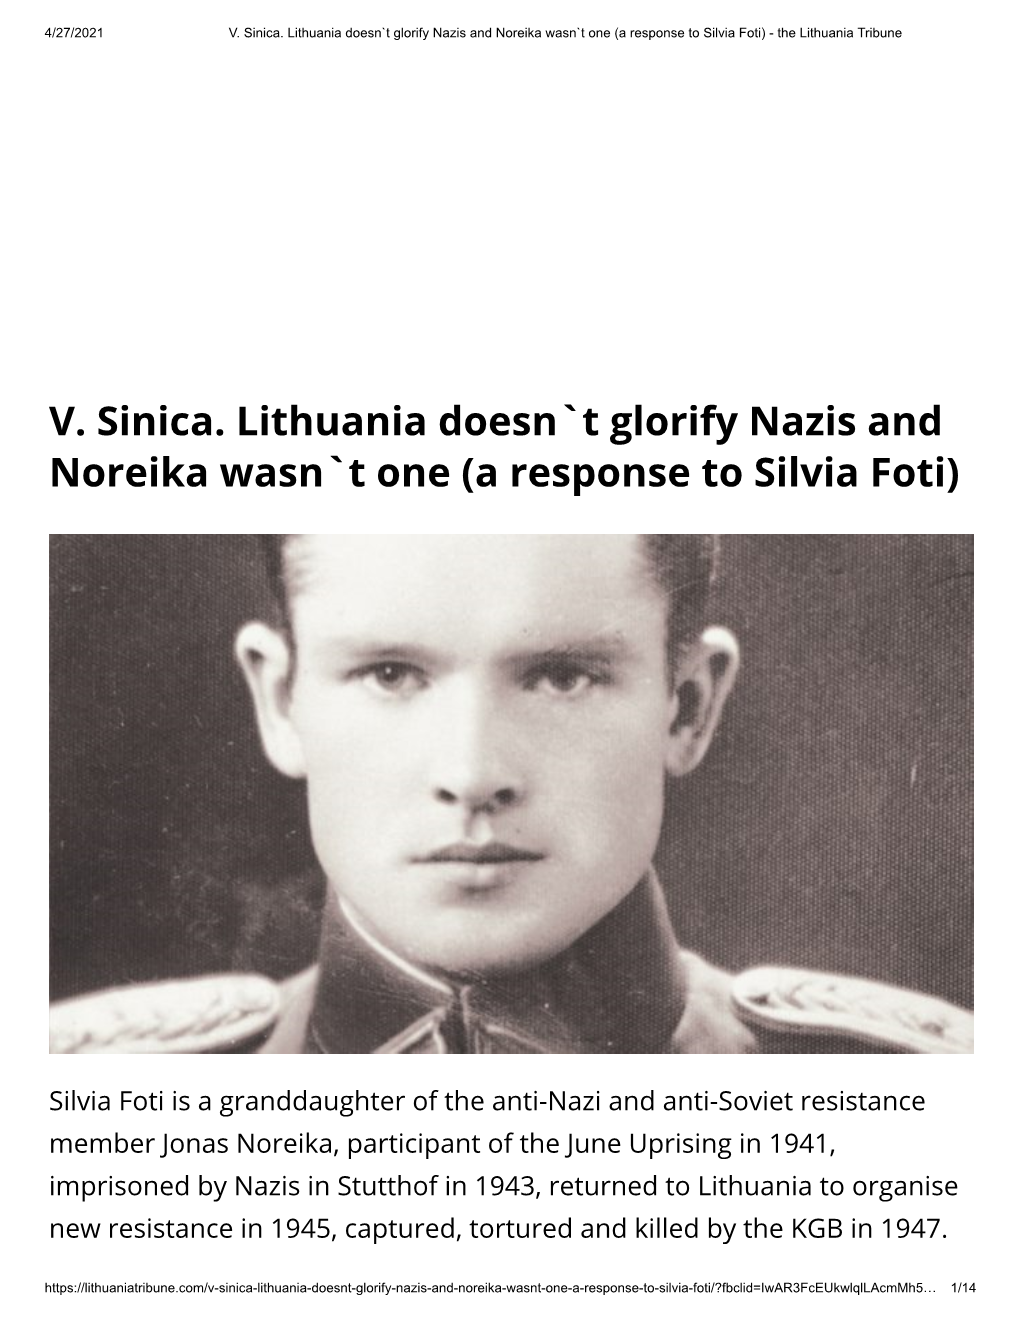 V. Sinica. Lithuania Doesn`T Glorify Nazis and Noreika Wasn`T One (A Response to Silvia Foti) - the Lithuania Tribune